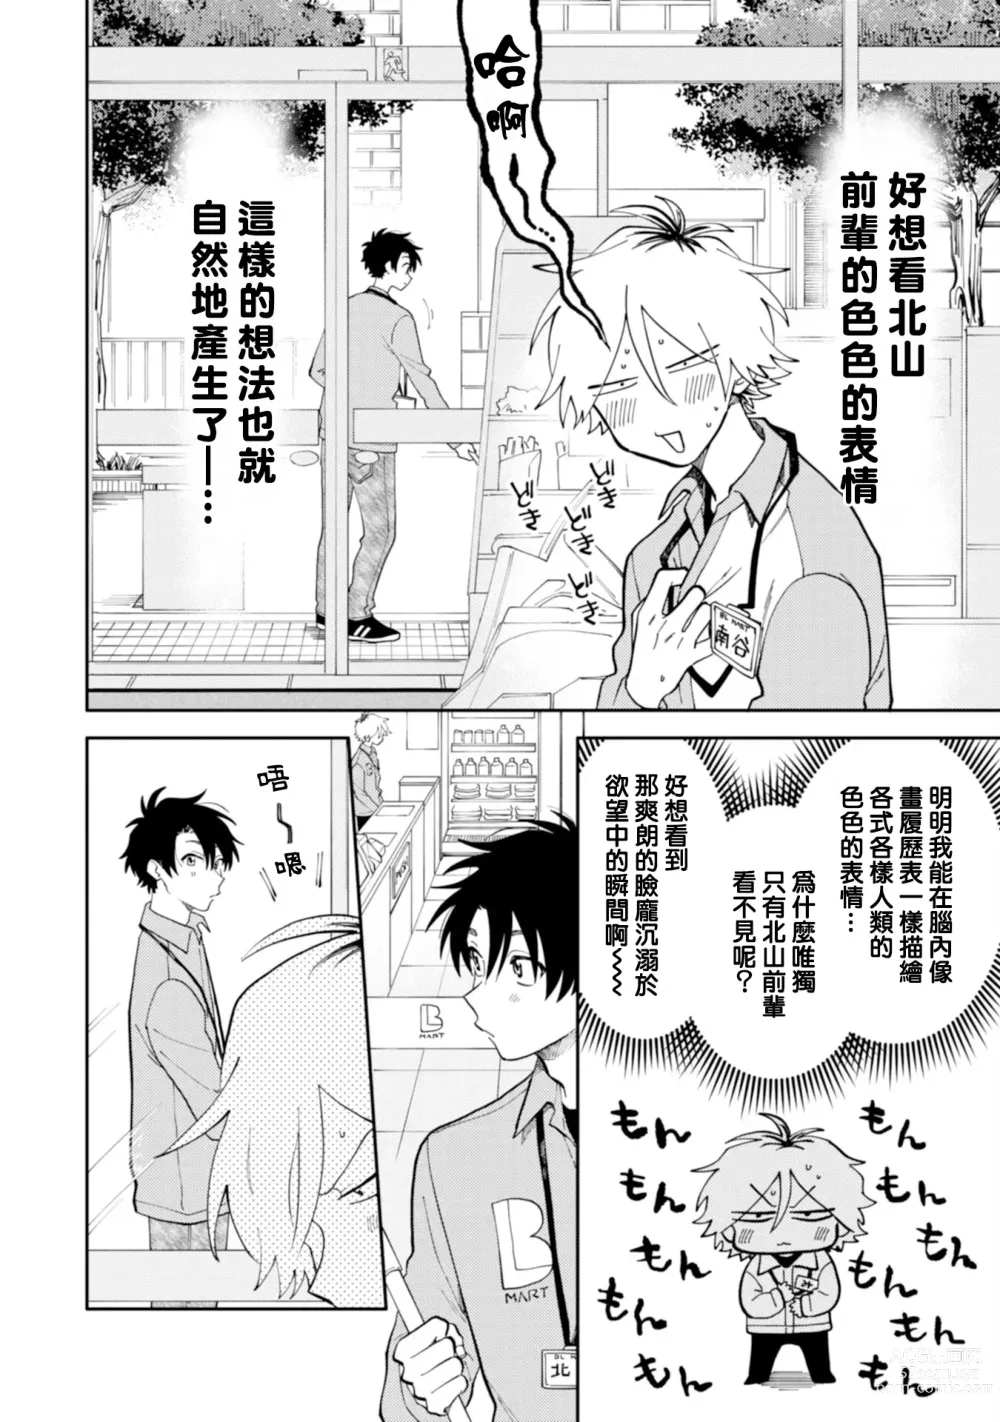 Page 12 of manga 北山君与南谷君